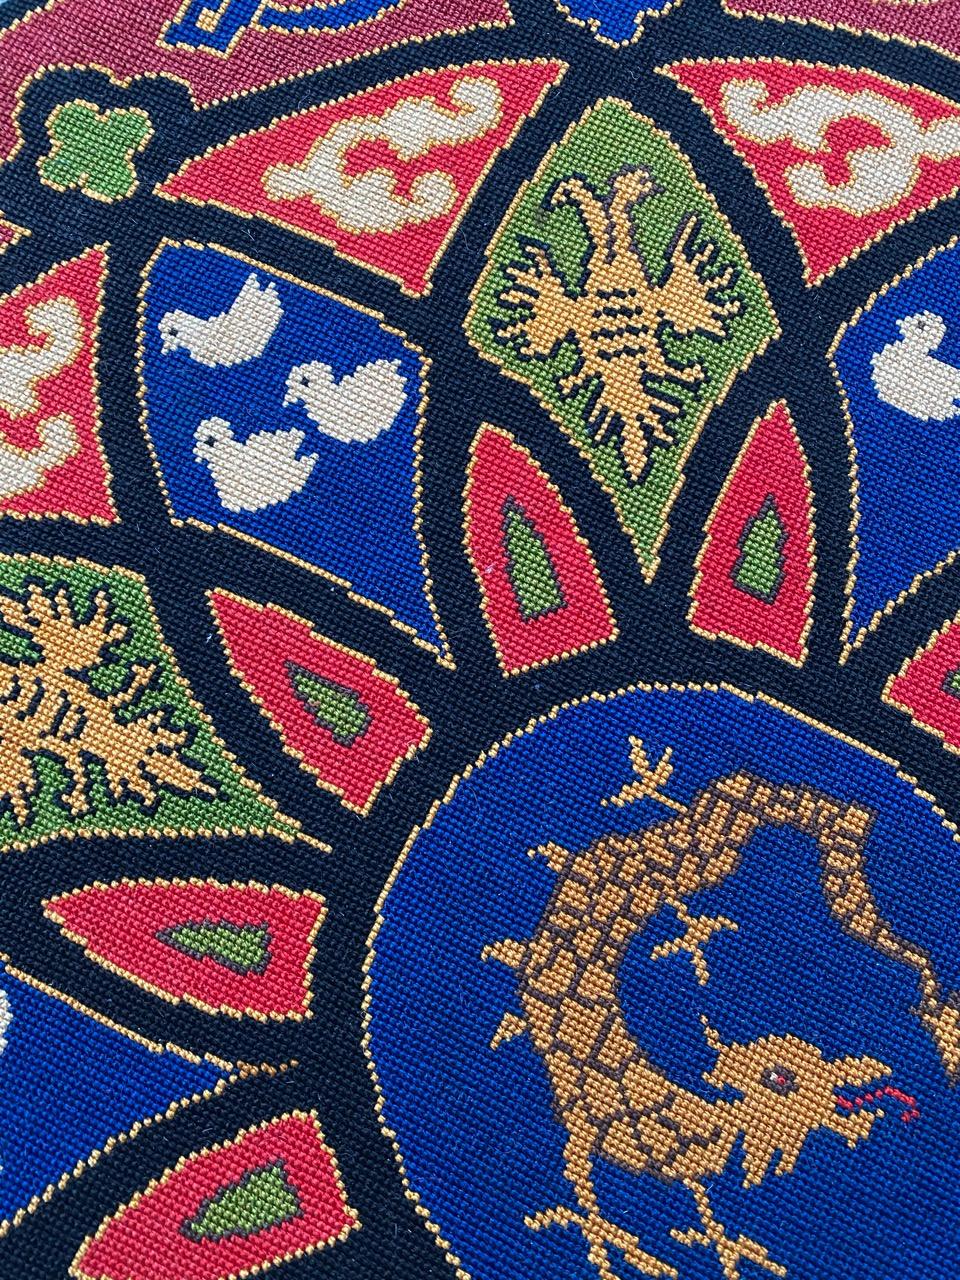 Soie Bobyrug's Beautiful Antique French Needlepoint Round Tapestry (Tapisserie à l'aiguille française ancienne) en vente